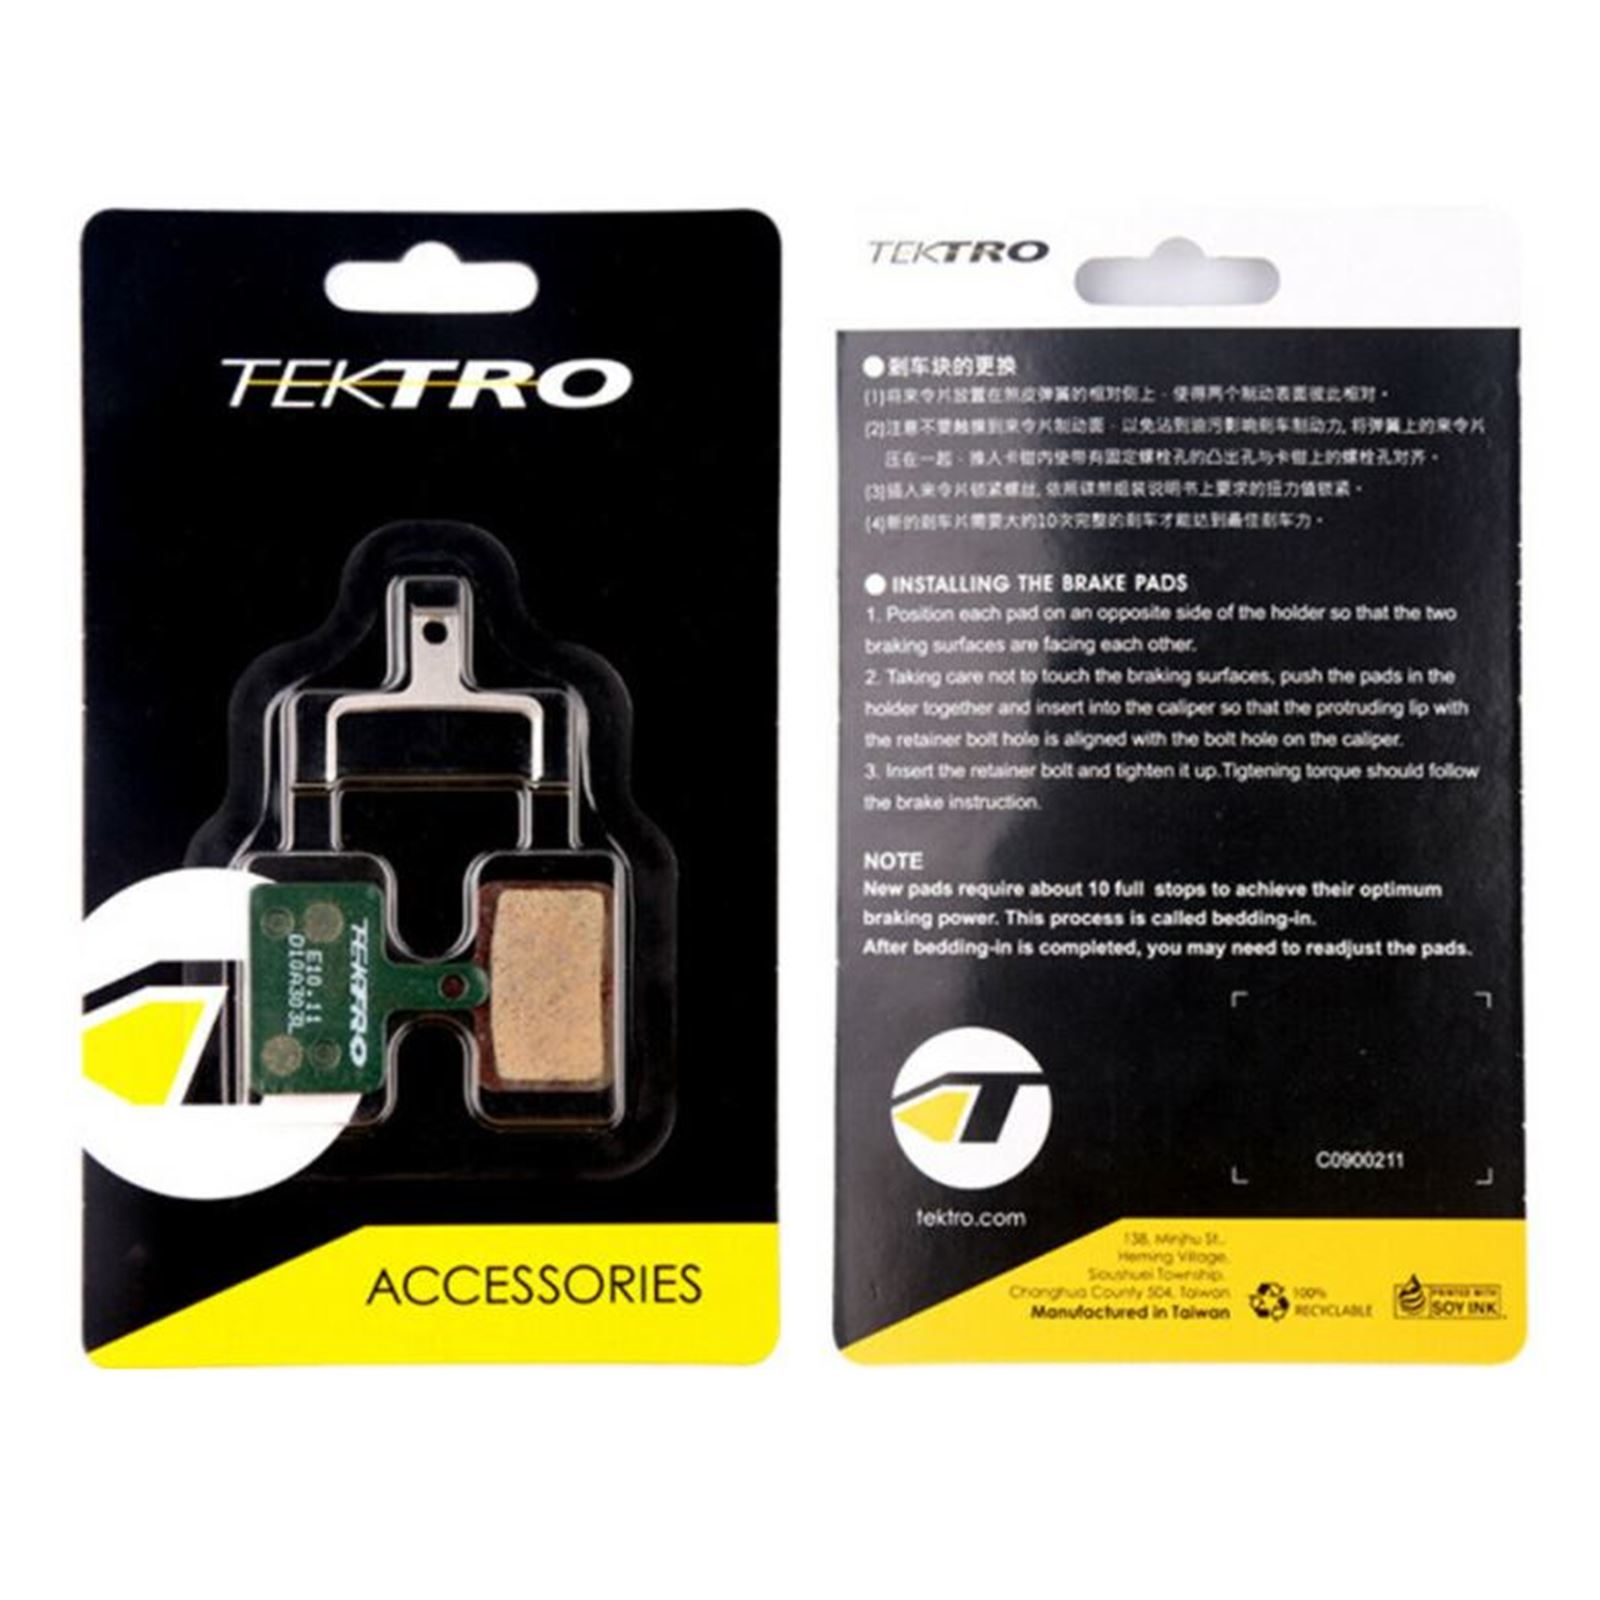 Tektro E10.11 High Performance Metal Ceramic Compound Brake Pads Return Spring 